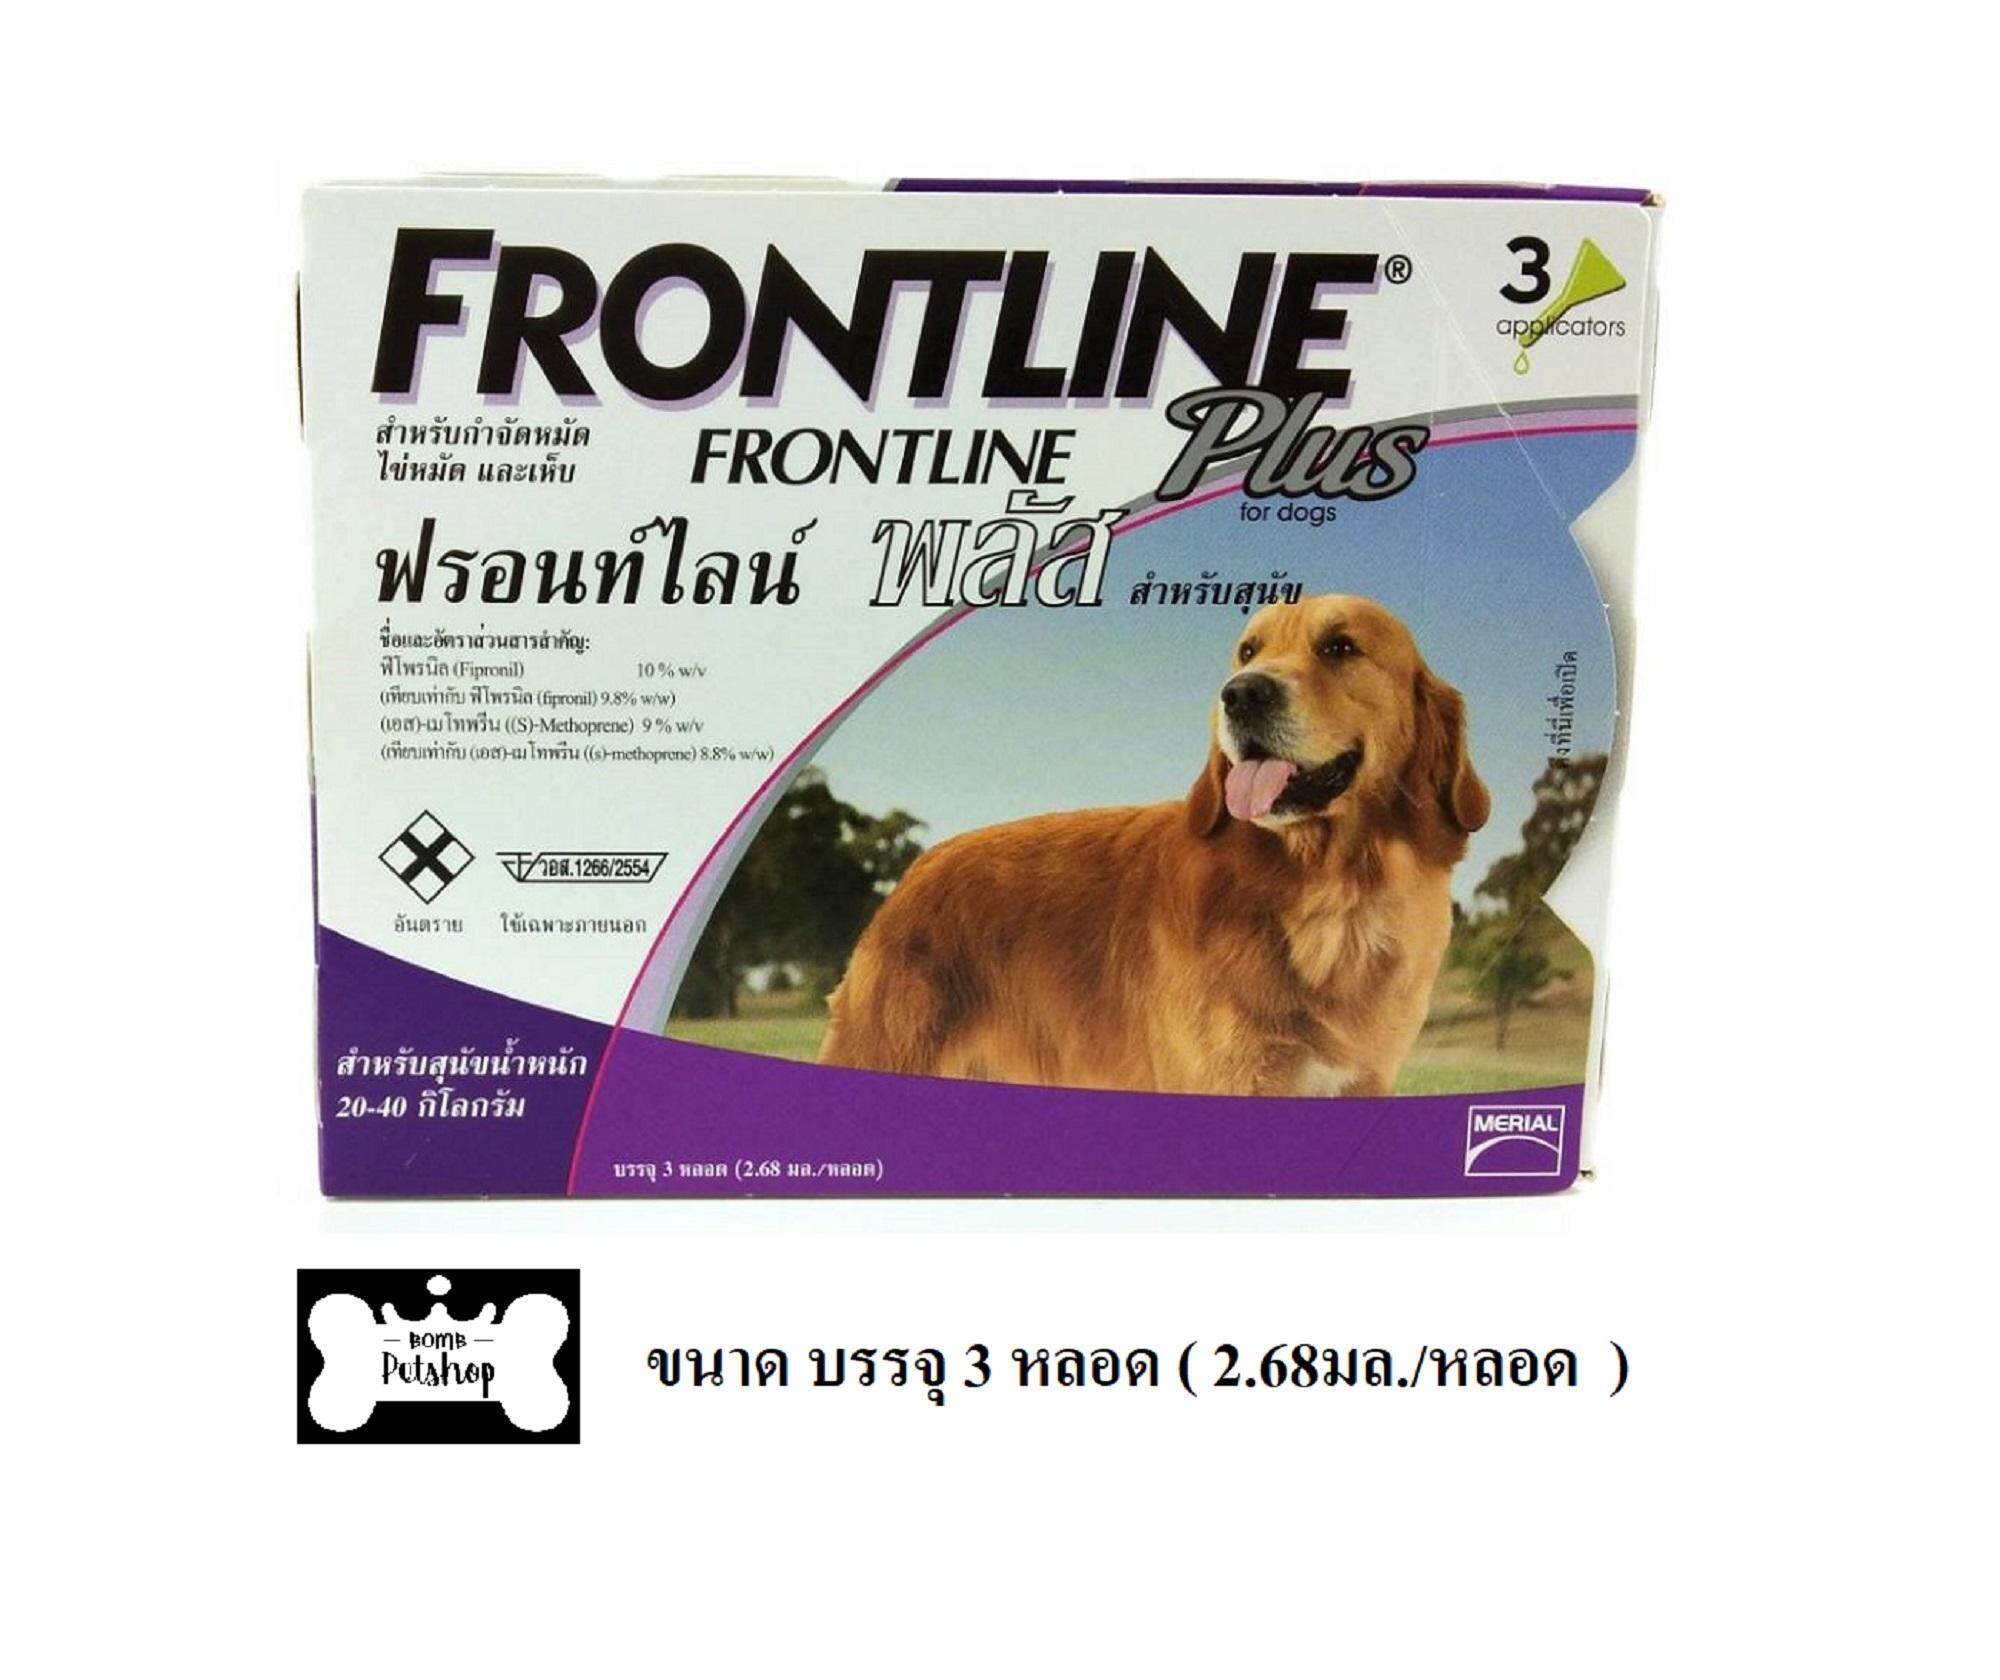 Frontline Plus for dogs Spot On tick flea ที่หยอดกำจัดเห็บหมัด ใช้กำจัดเห็บหมัดบนตัวสุนัข สำหรับสุนัขน้ำหนัก 20-40 kg บรรจุ 3 หลอด จำนวน 1 กล่อง EXP.01-2023